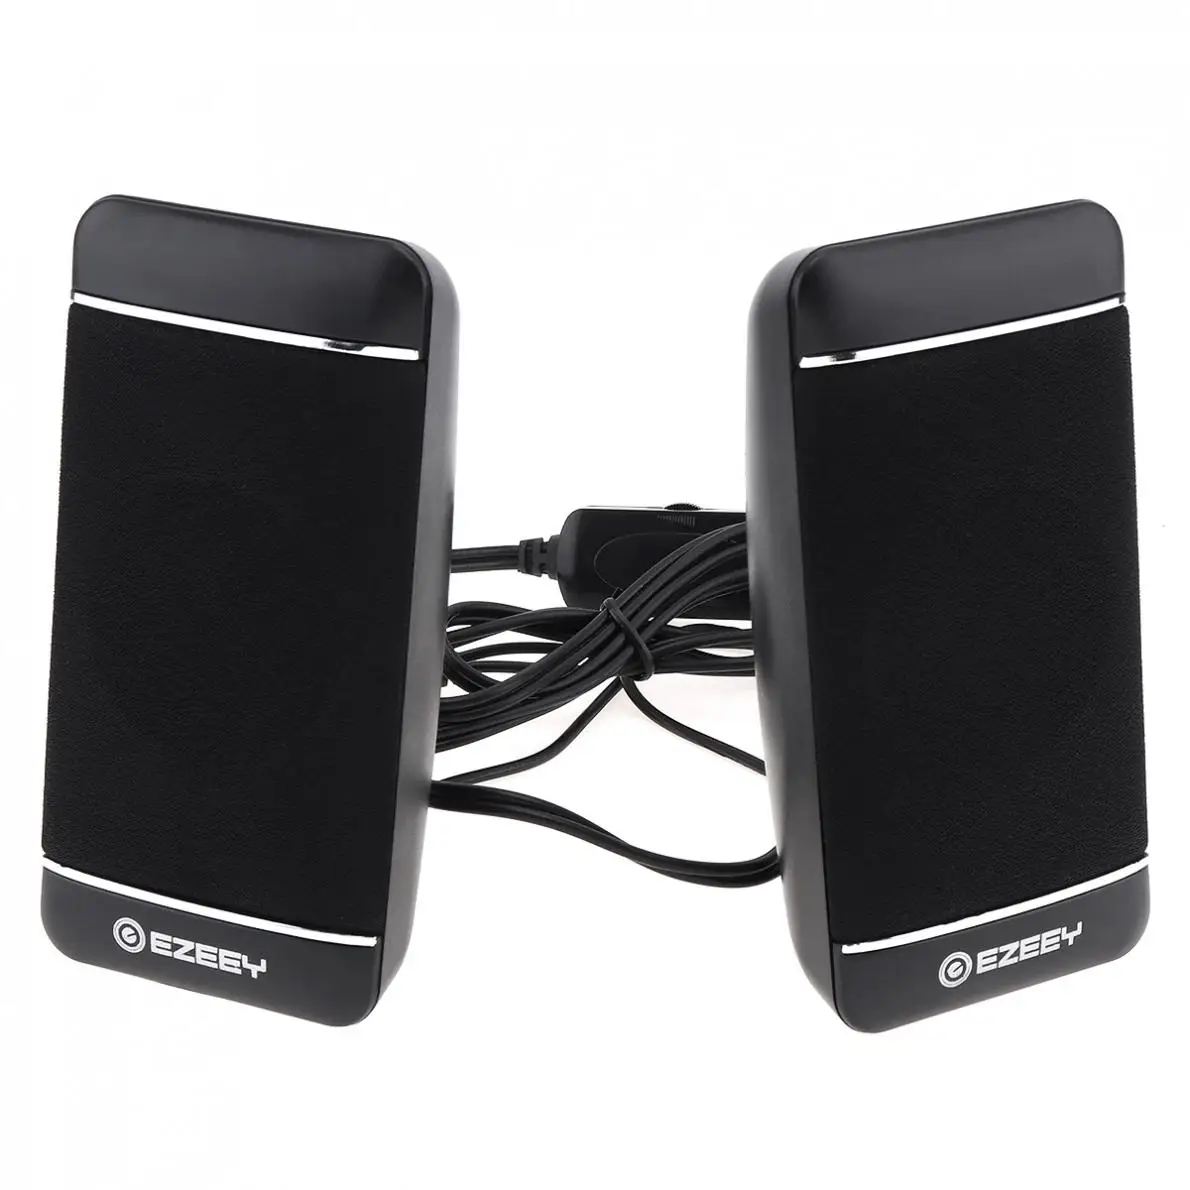 EZEEY S4 мини USB 5V сабвуфер Динамик с 3,5 мм аудио разъем и объем Управление для ноутбука телефон